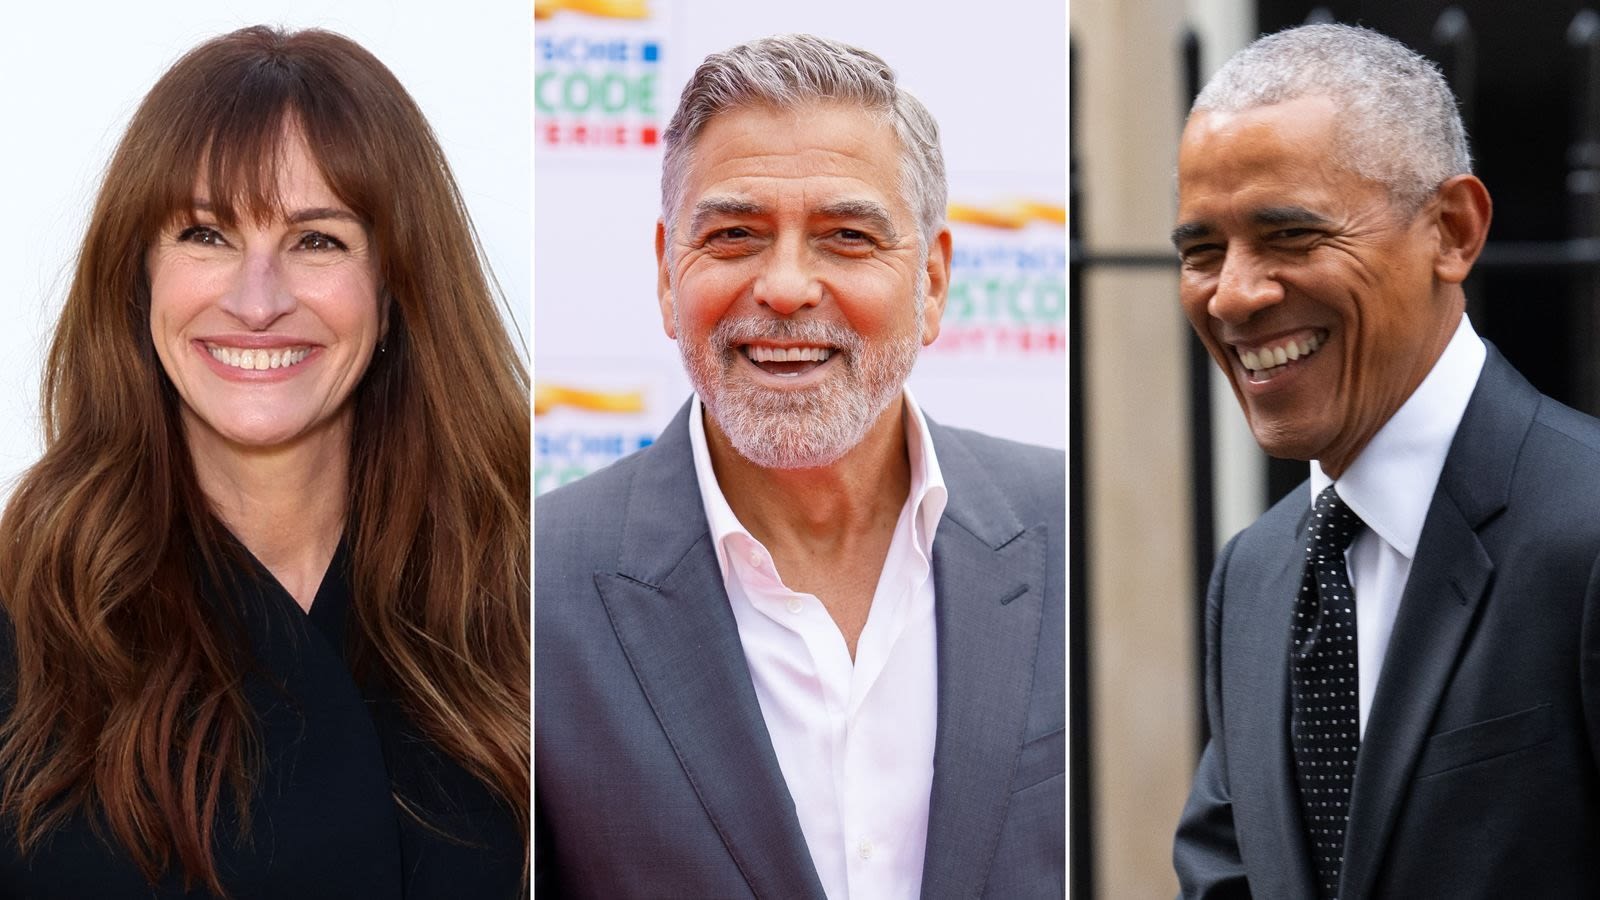 Julia Roberts, George Clooney and Barack Obama to headline Biden fundraiser - WTOP News